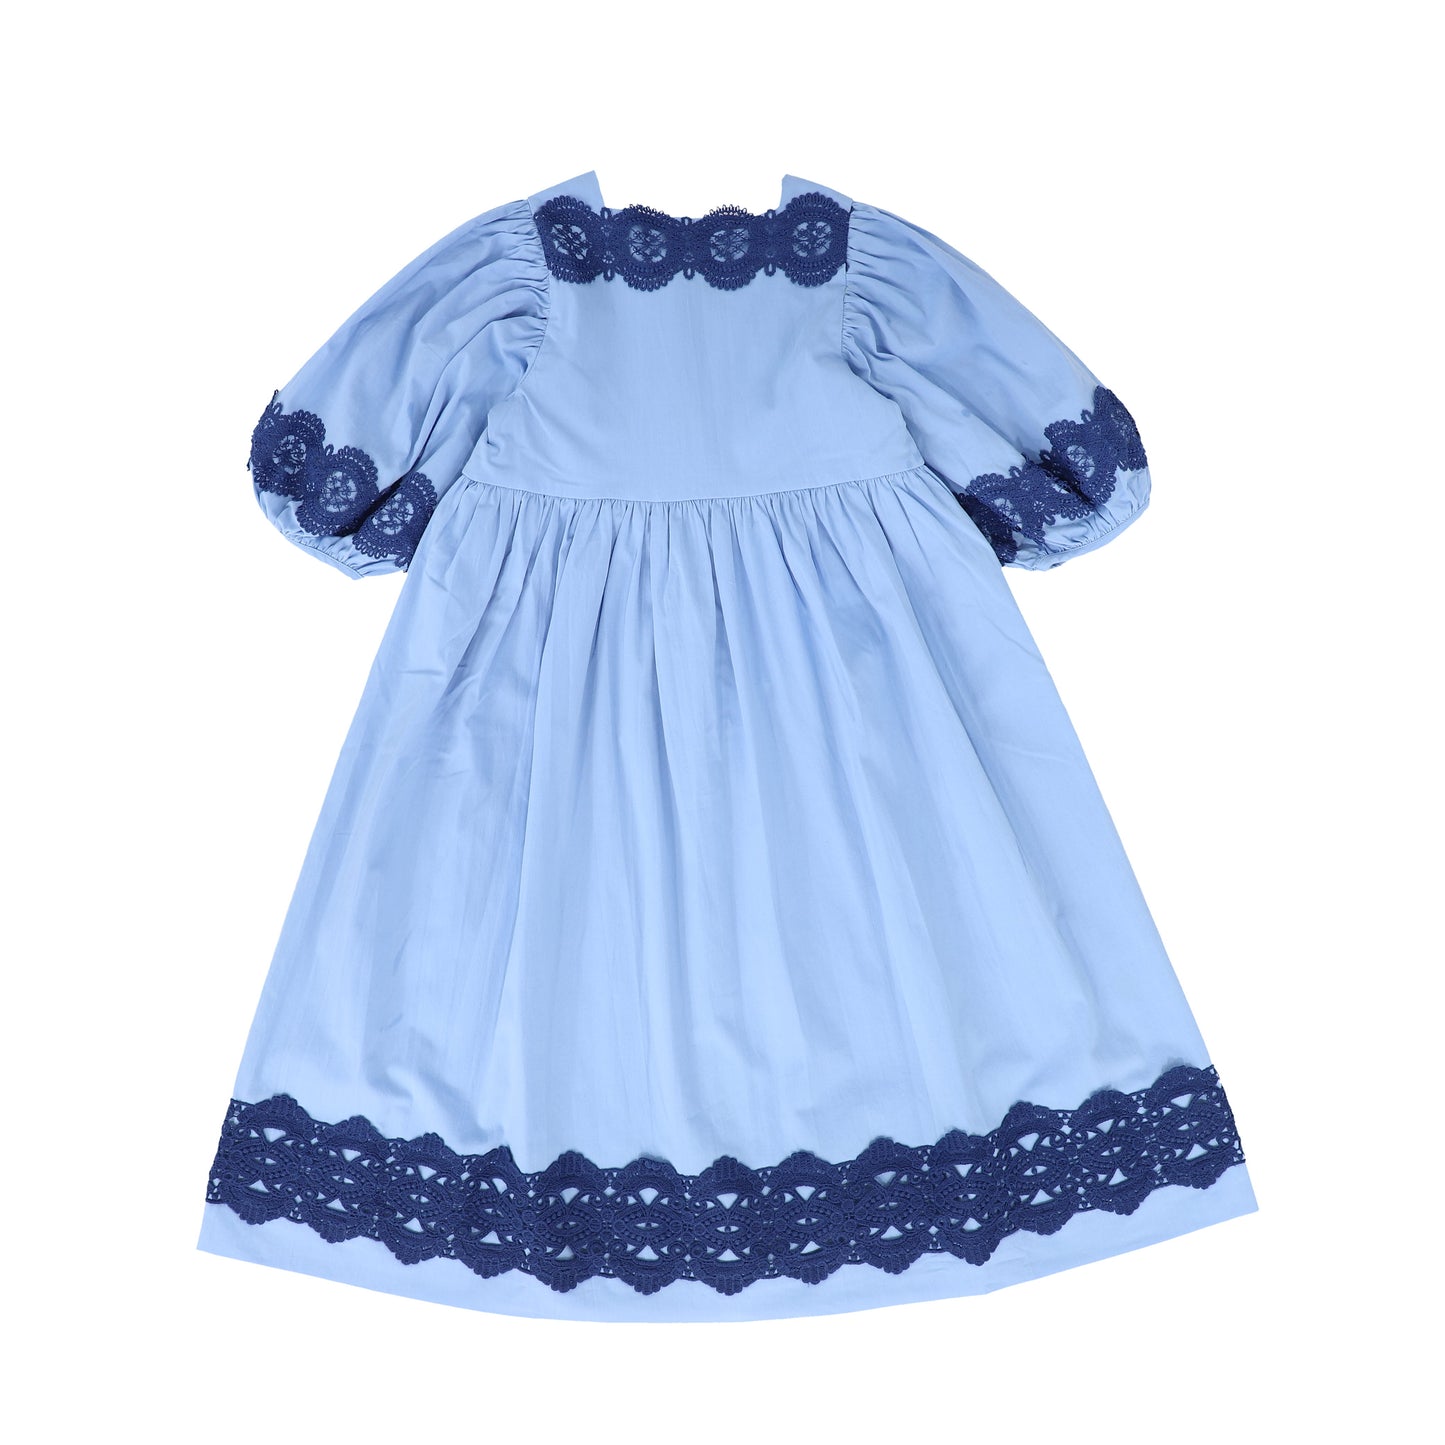 THE MIDDLE DAUGHTER BLUE/NAVY LACE TRIM DRESS [FINAL SALE]